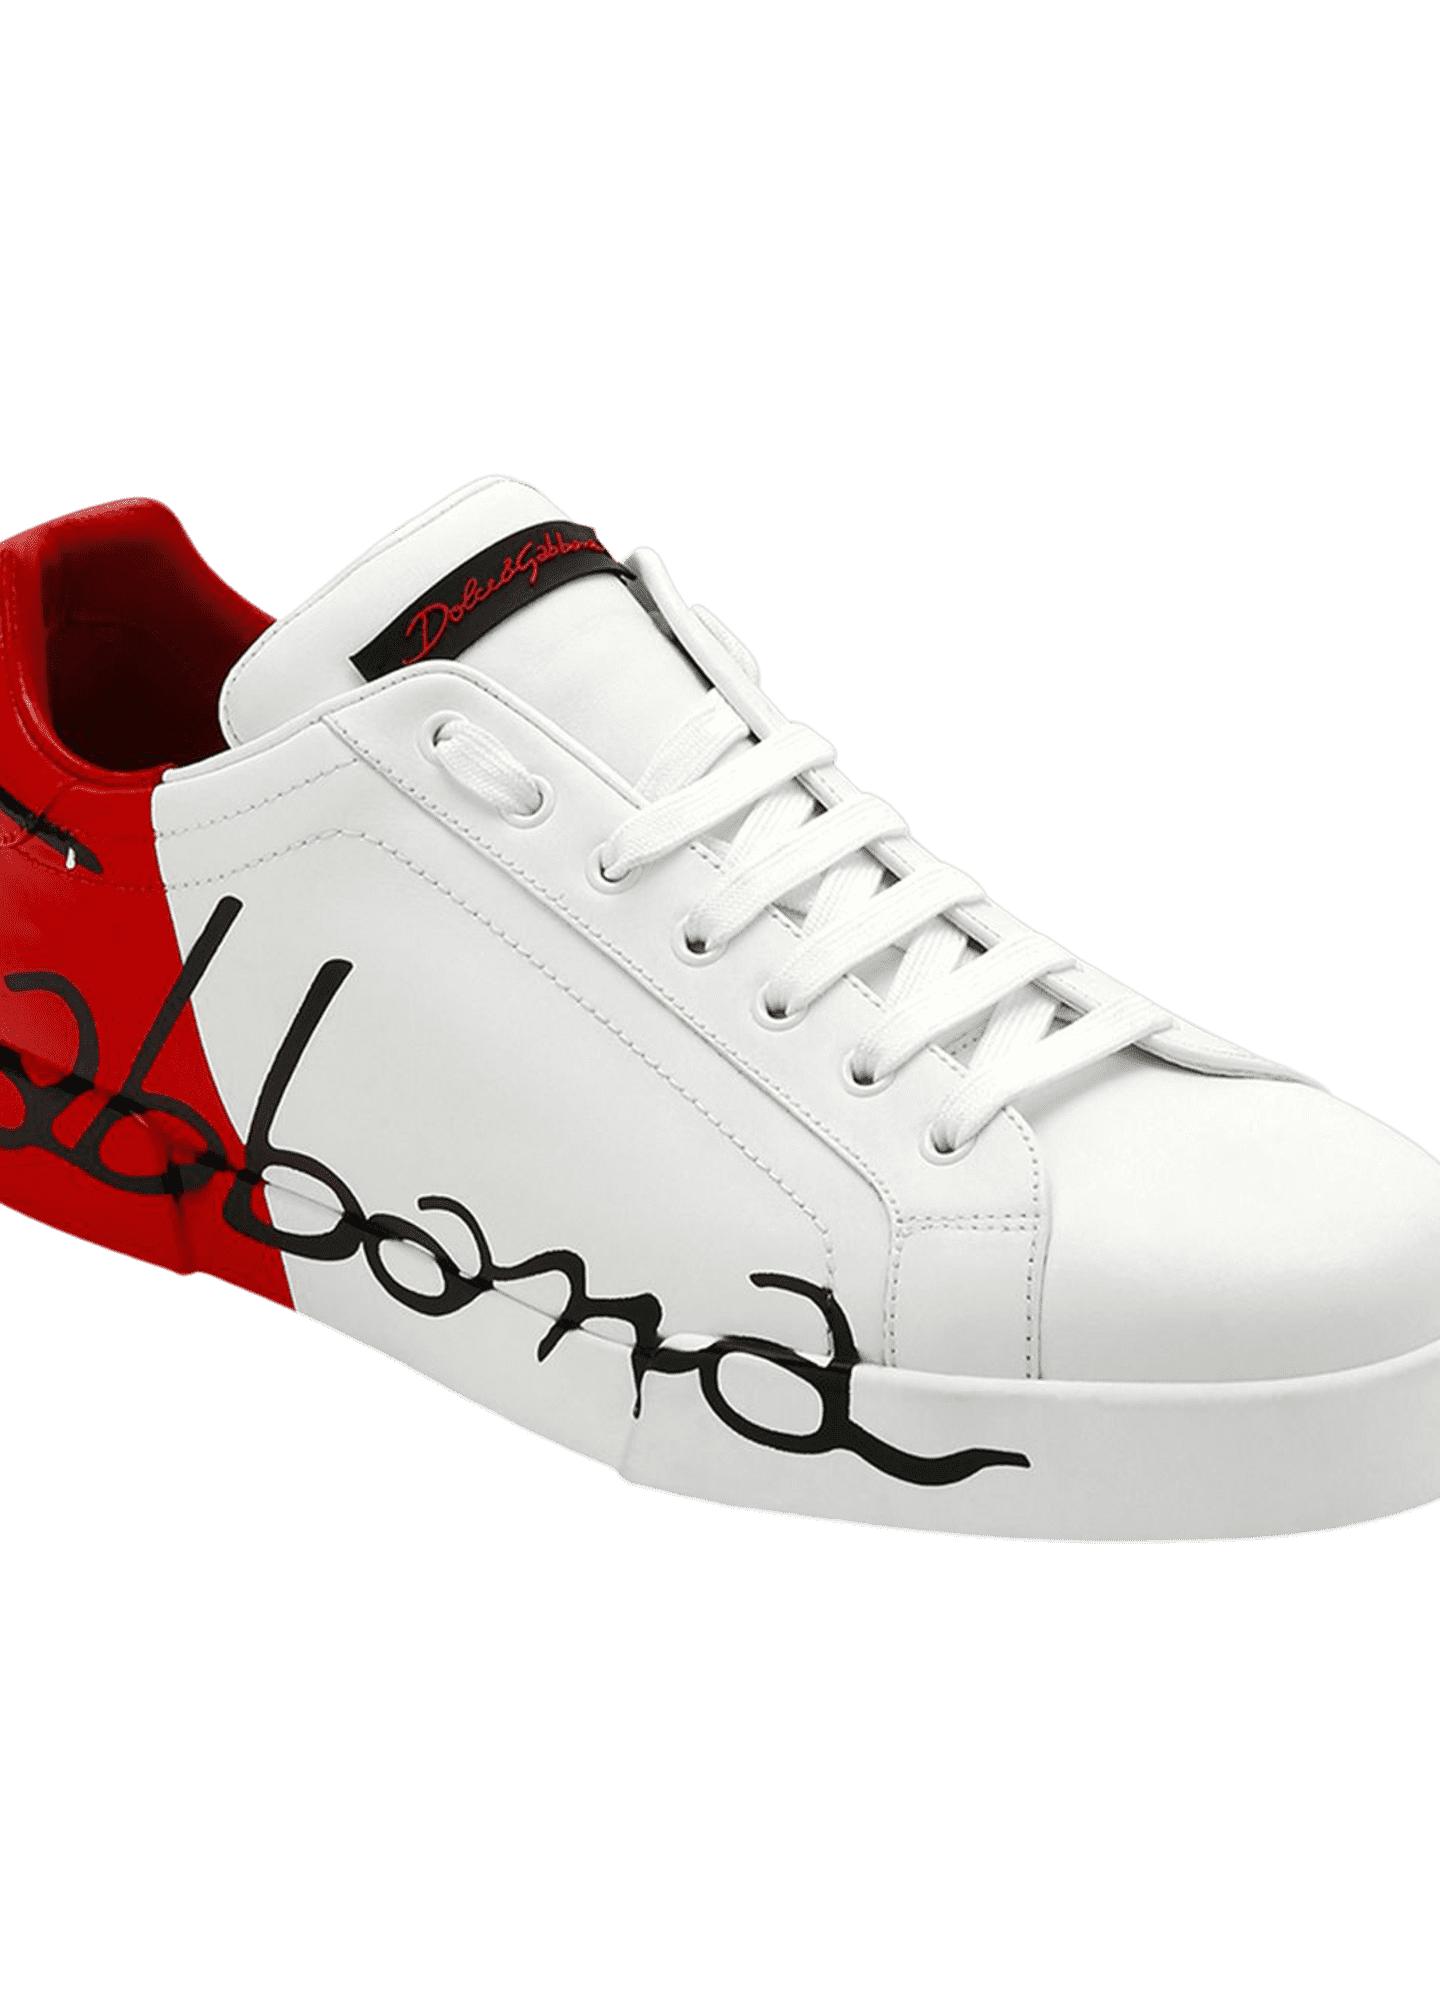 Dolce & Gabbana Leather Patent Calfskin Portofino Sneakers in Red